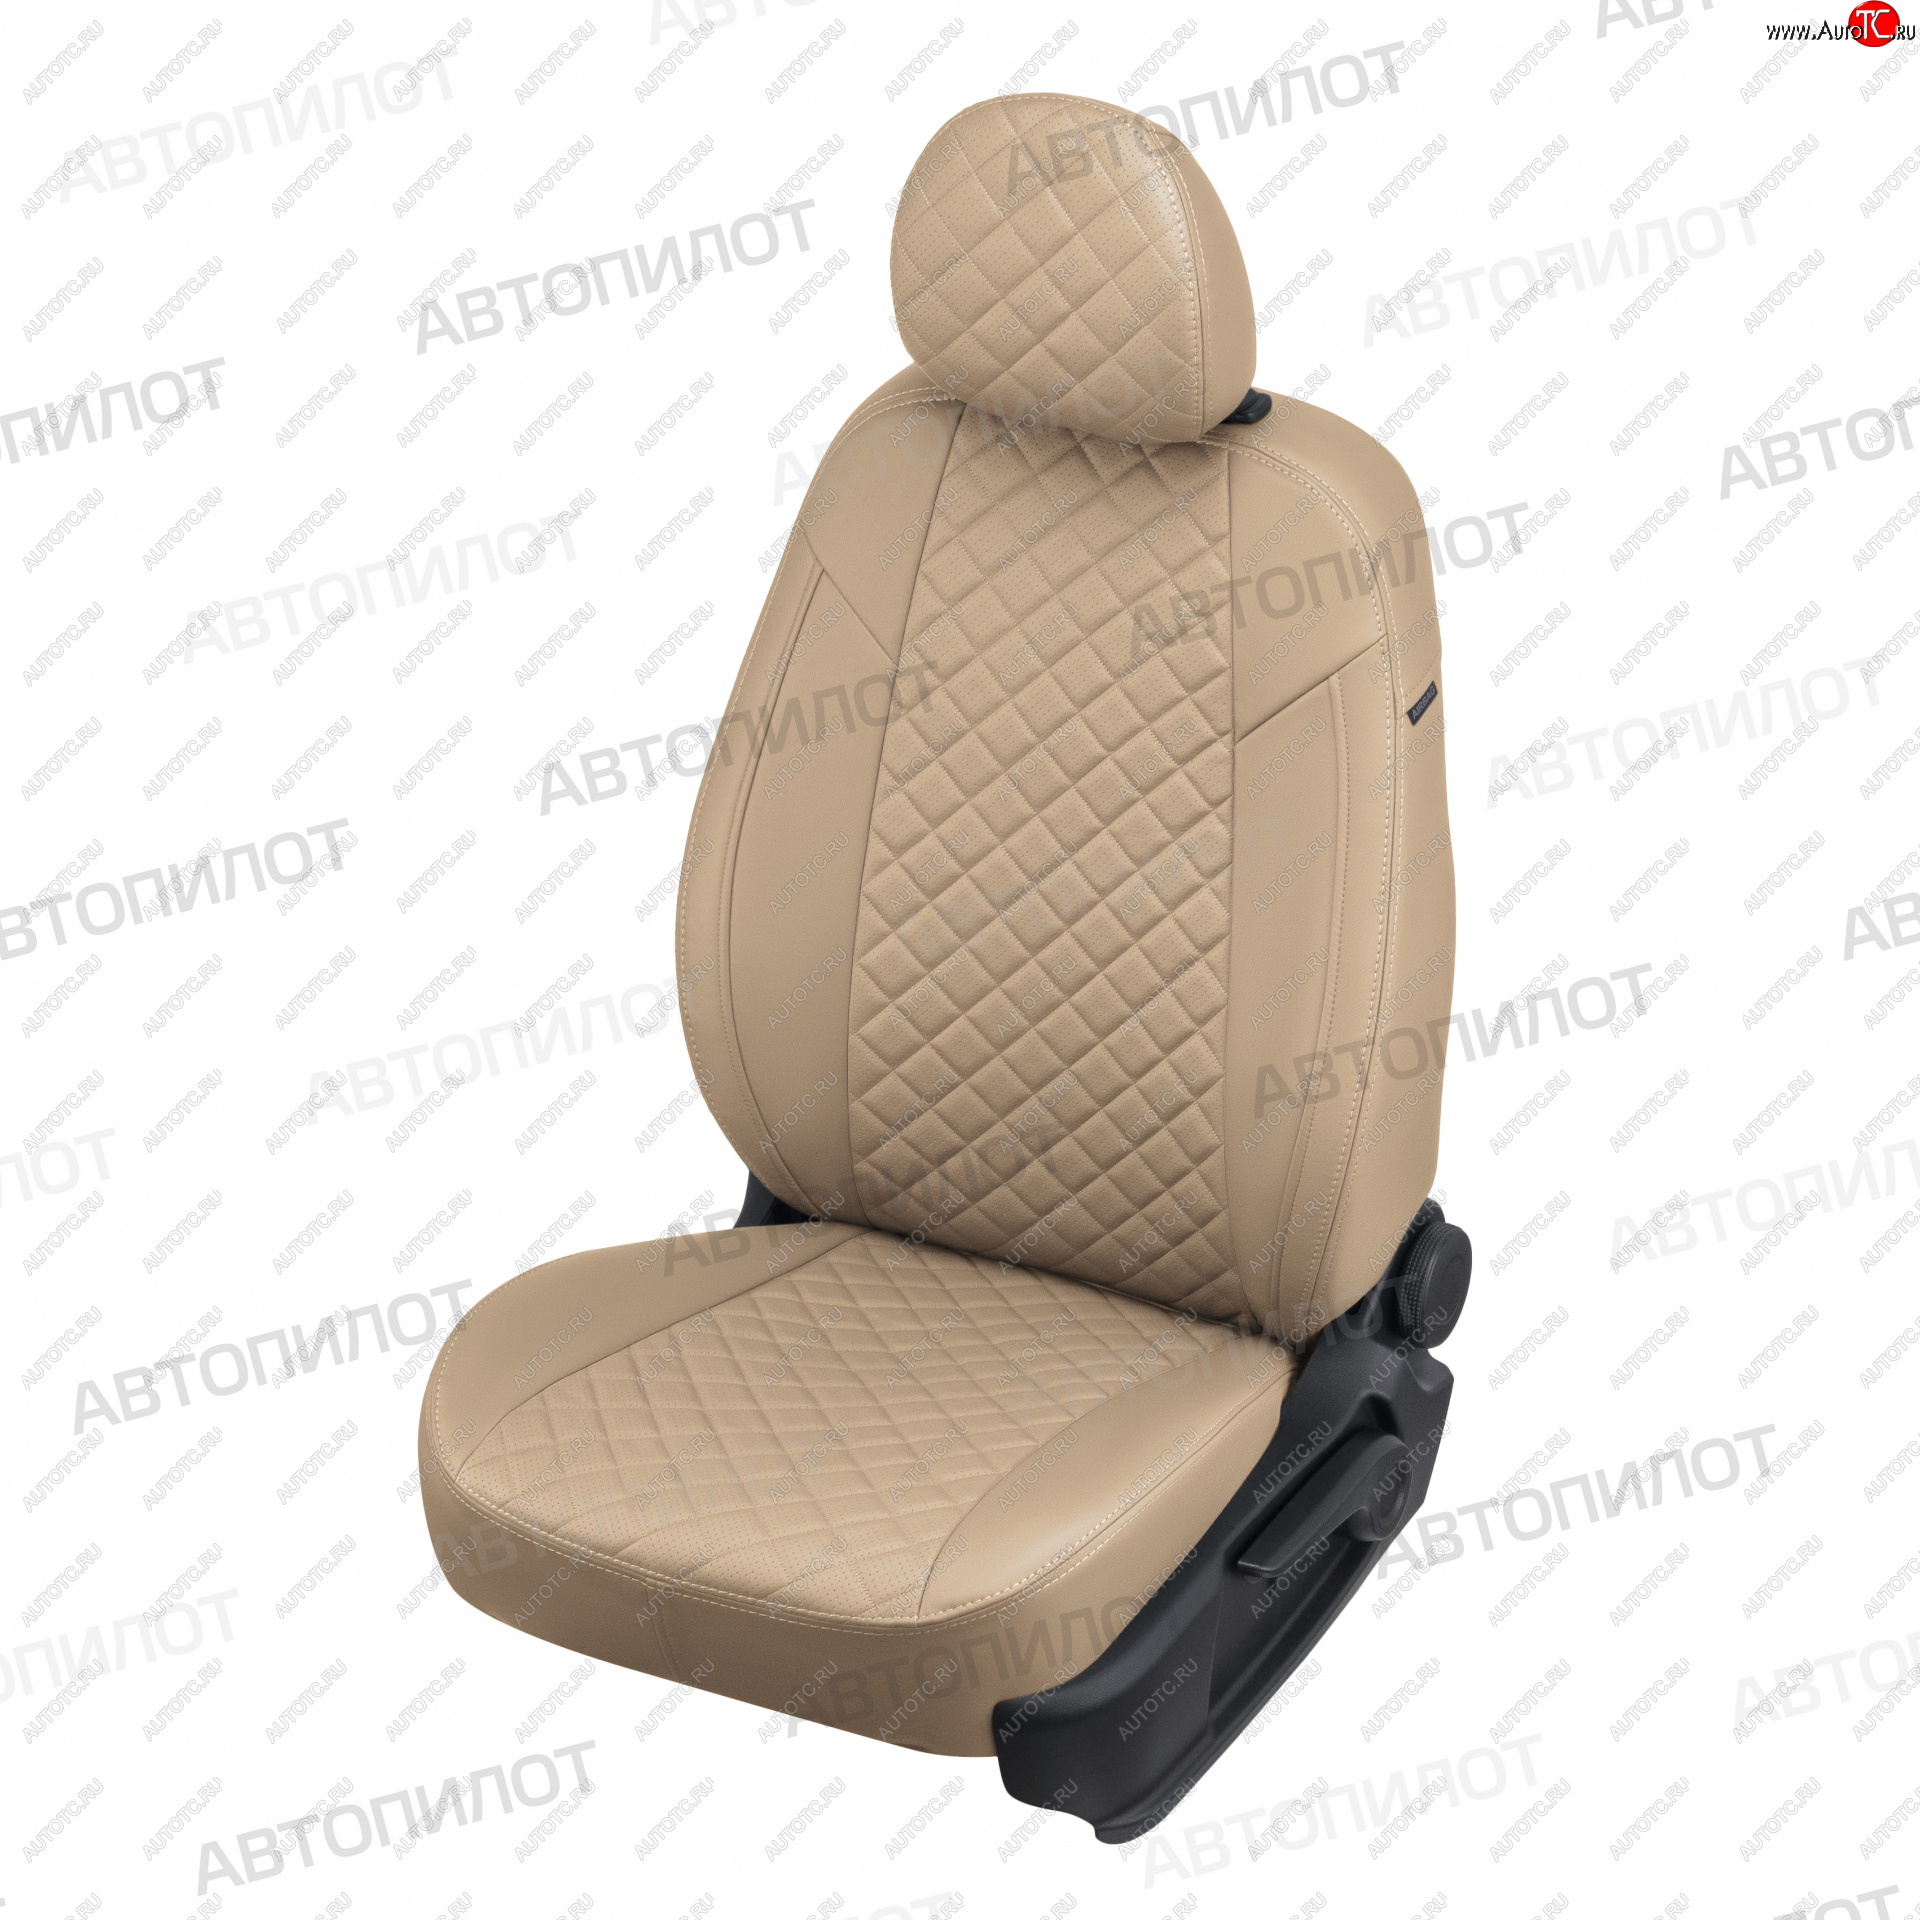 14 499 р. Чехлы сидений (Titanium, экокожа) Автопилот Ромб  Ford Mondeo (2007-2014) (темно-бежевый)